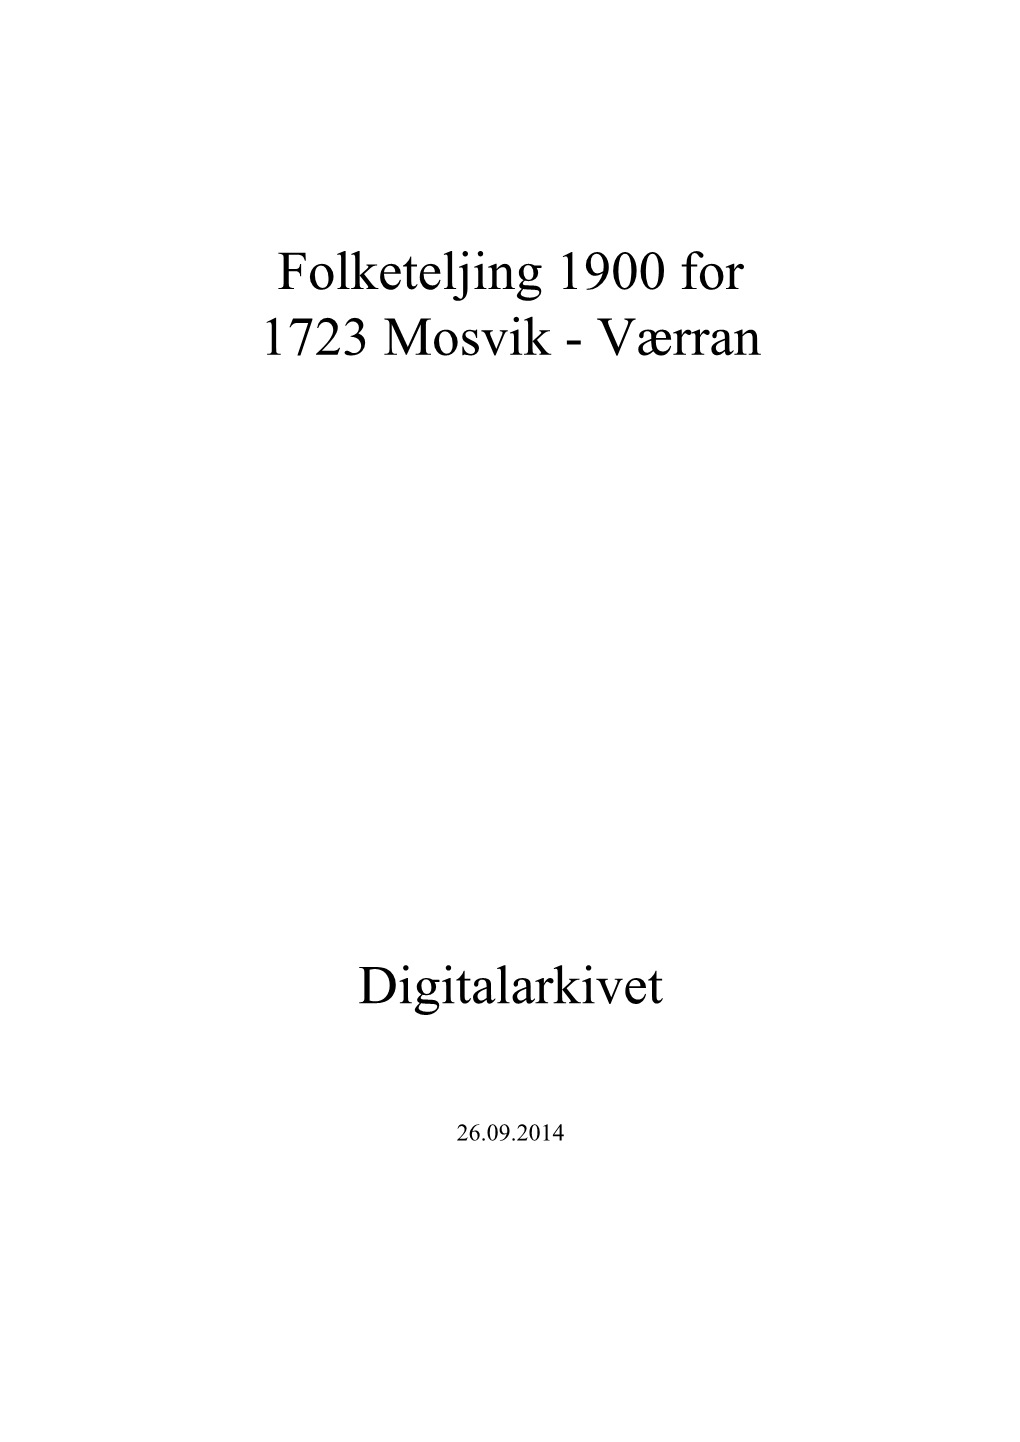 Folketeljing 1900 for 1723 Mosvik - Værran